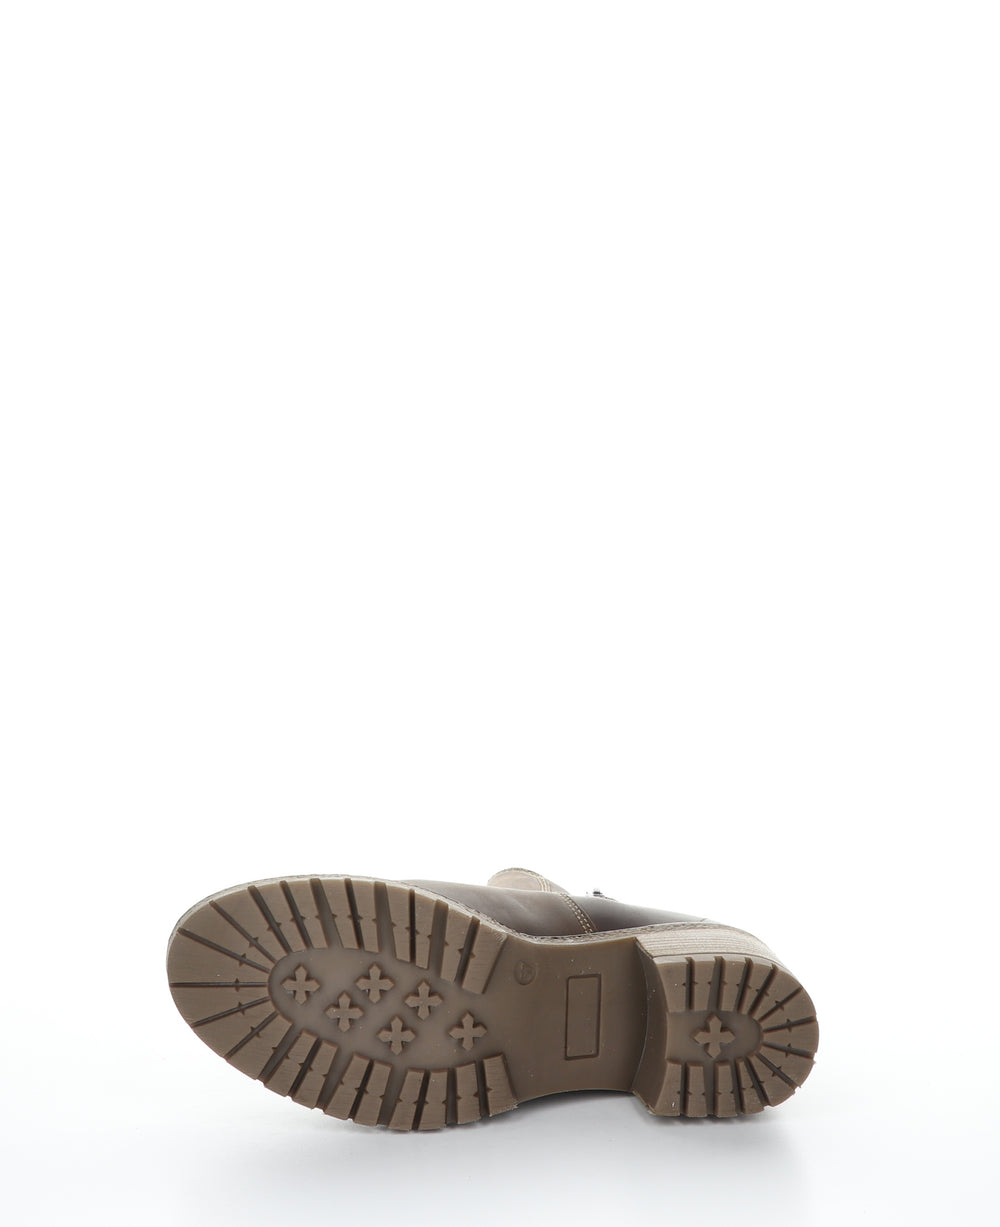 MASS Espresso/Dk Brn Zip Up Ankle Boots|MASS Bottines avec Fermeture Zippée in Marron